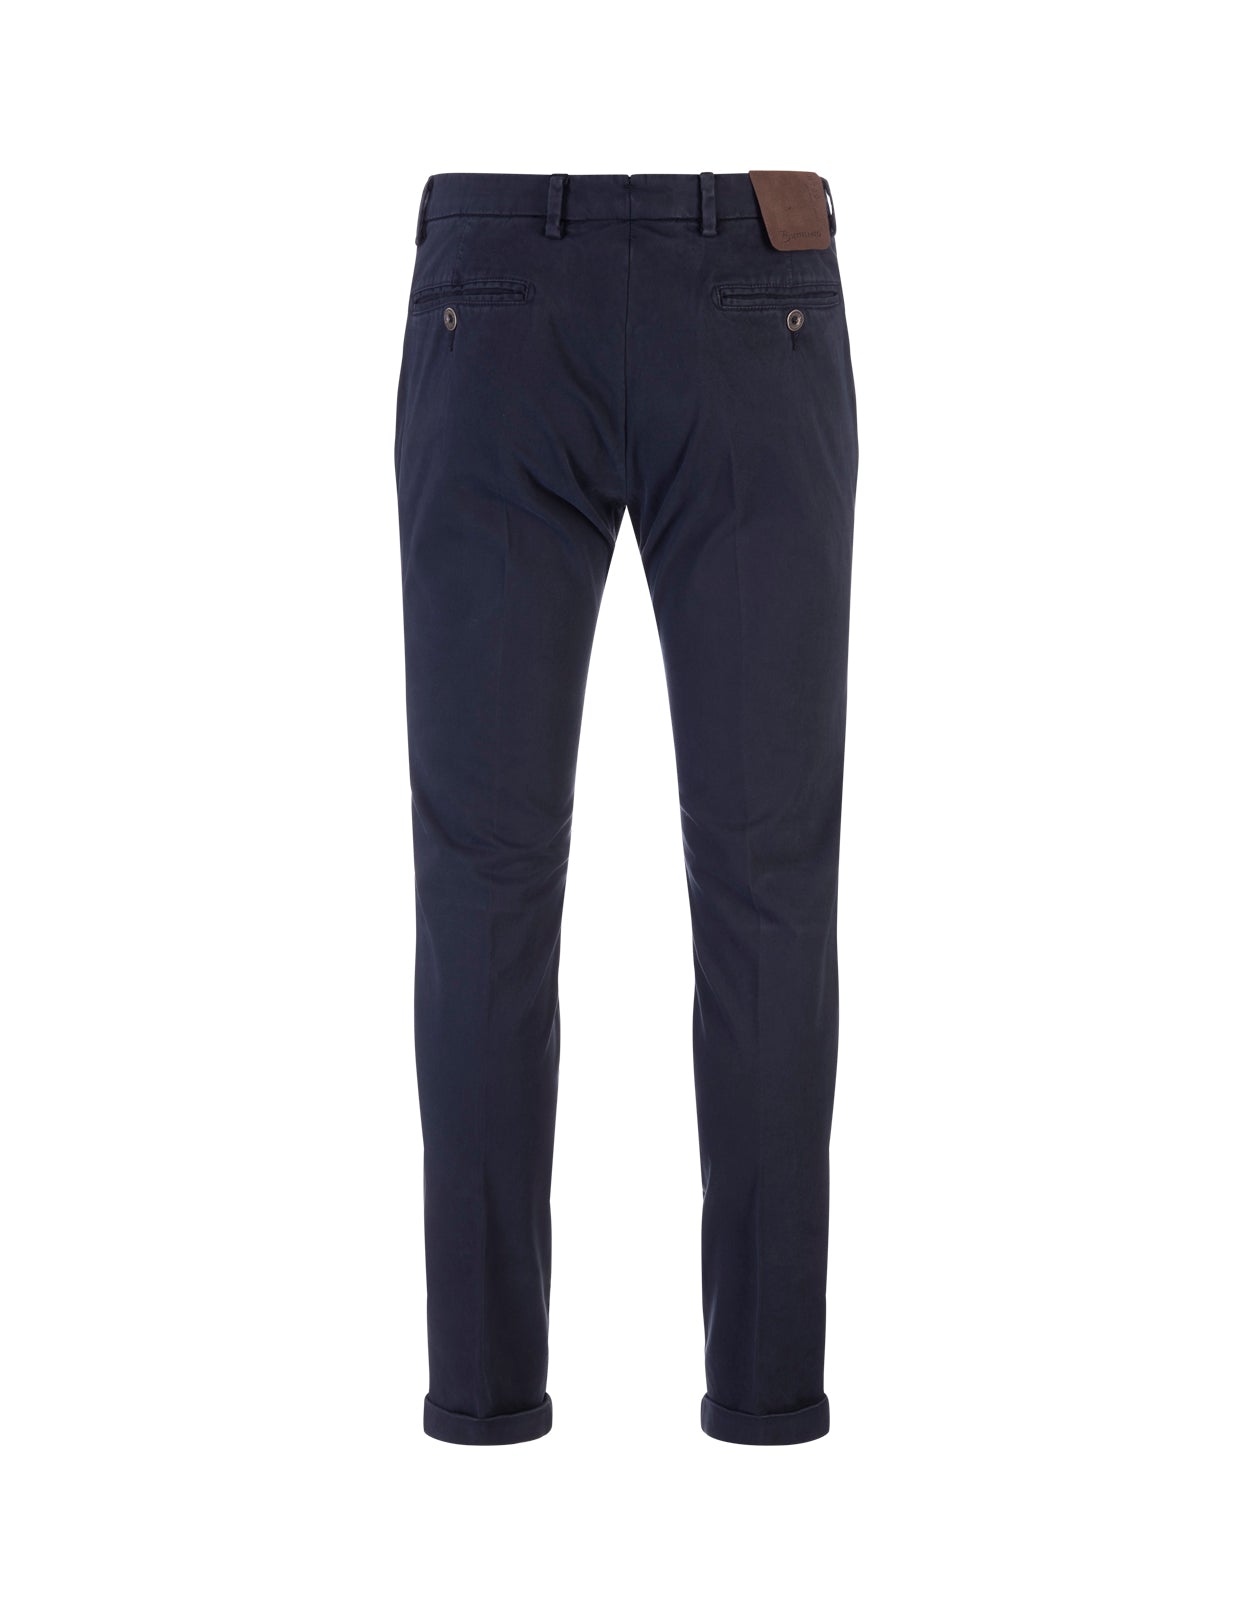 Pantalone Slim Fit BSettecento / Blu - Ideal Moda